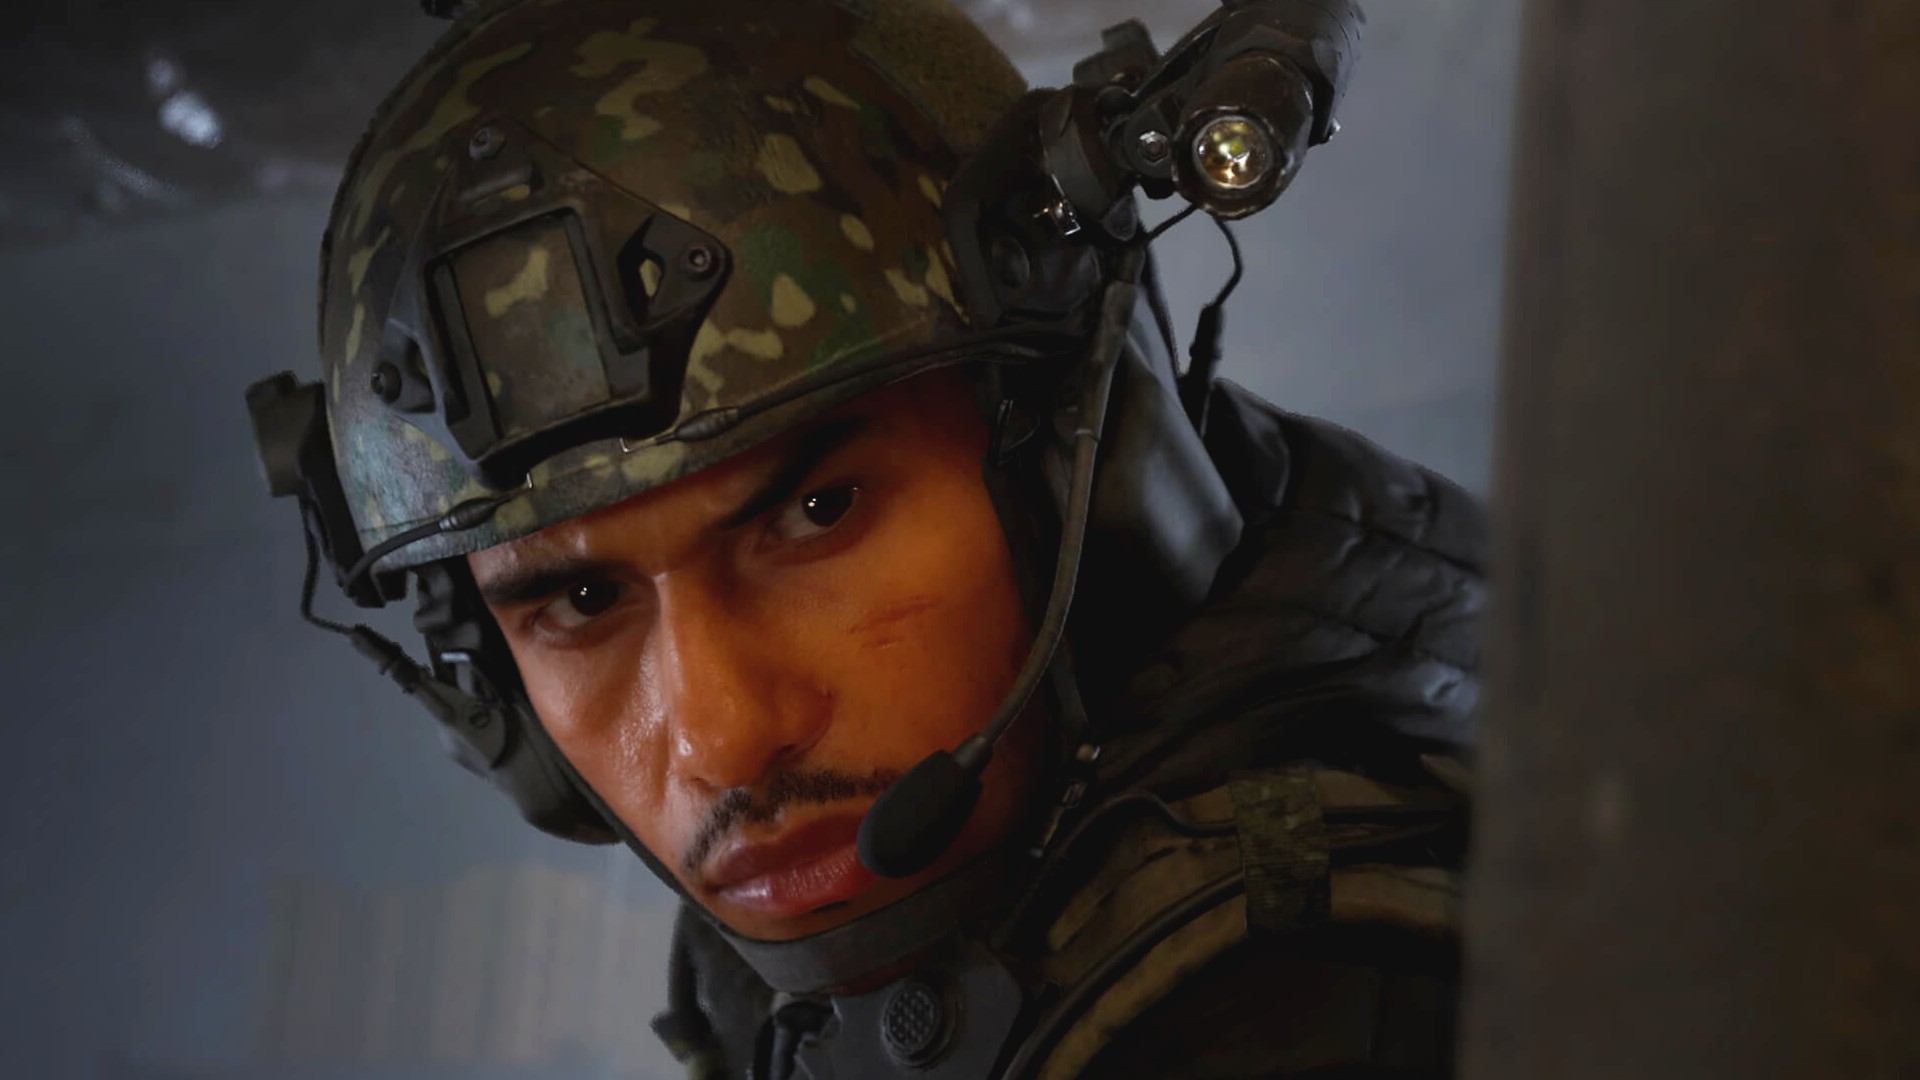 Call of Duty: Modern Warfare 3' Locks November 2023 Launch